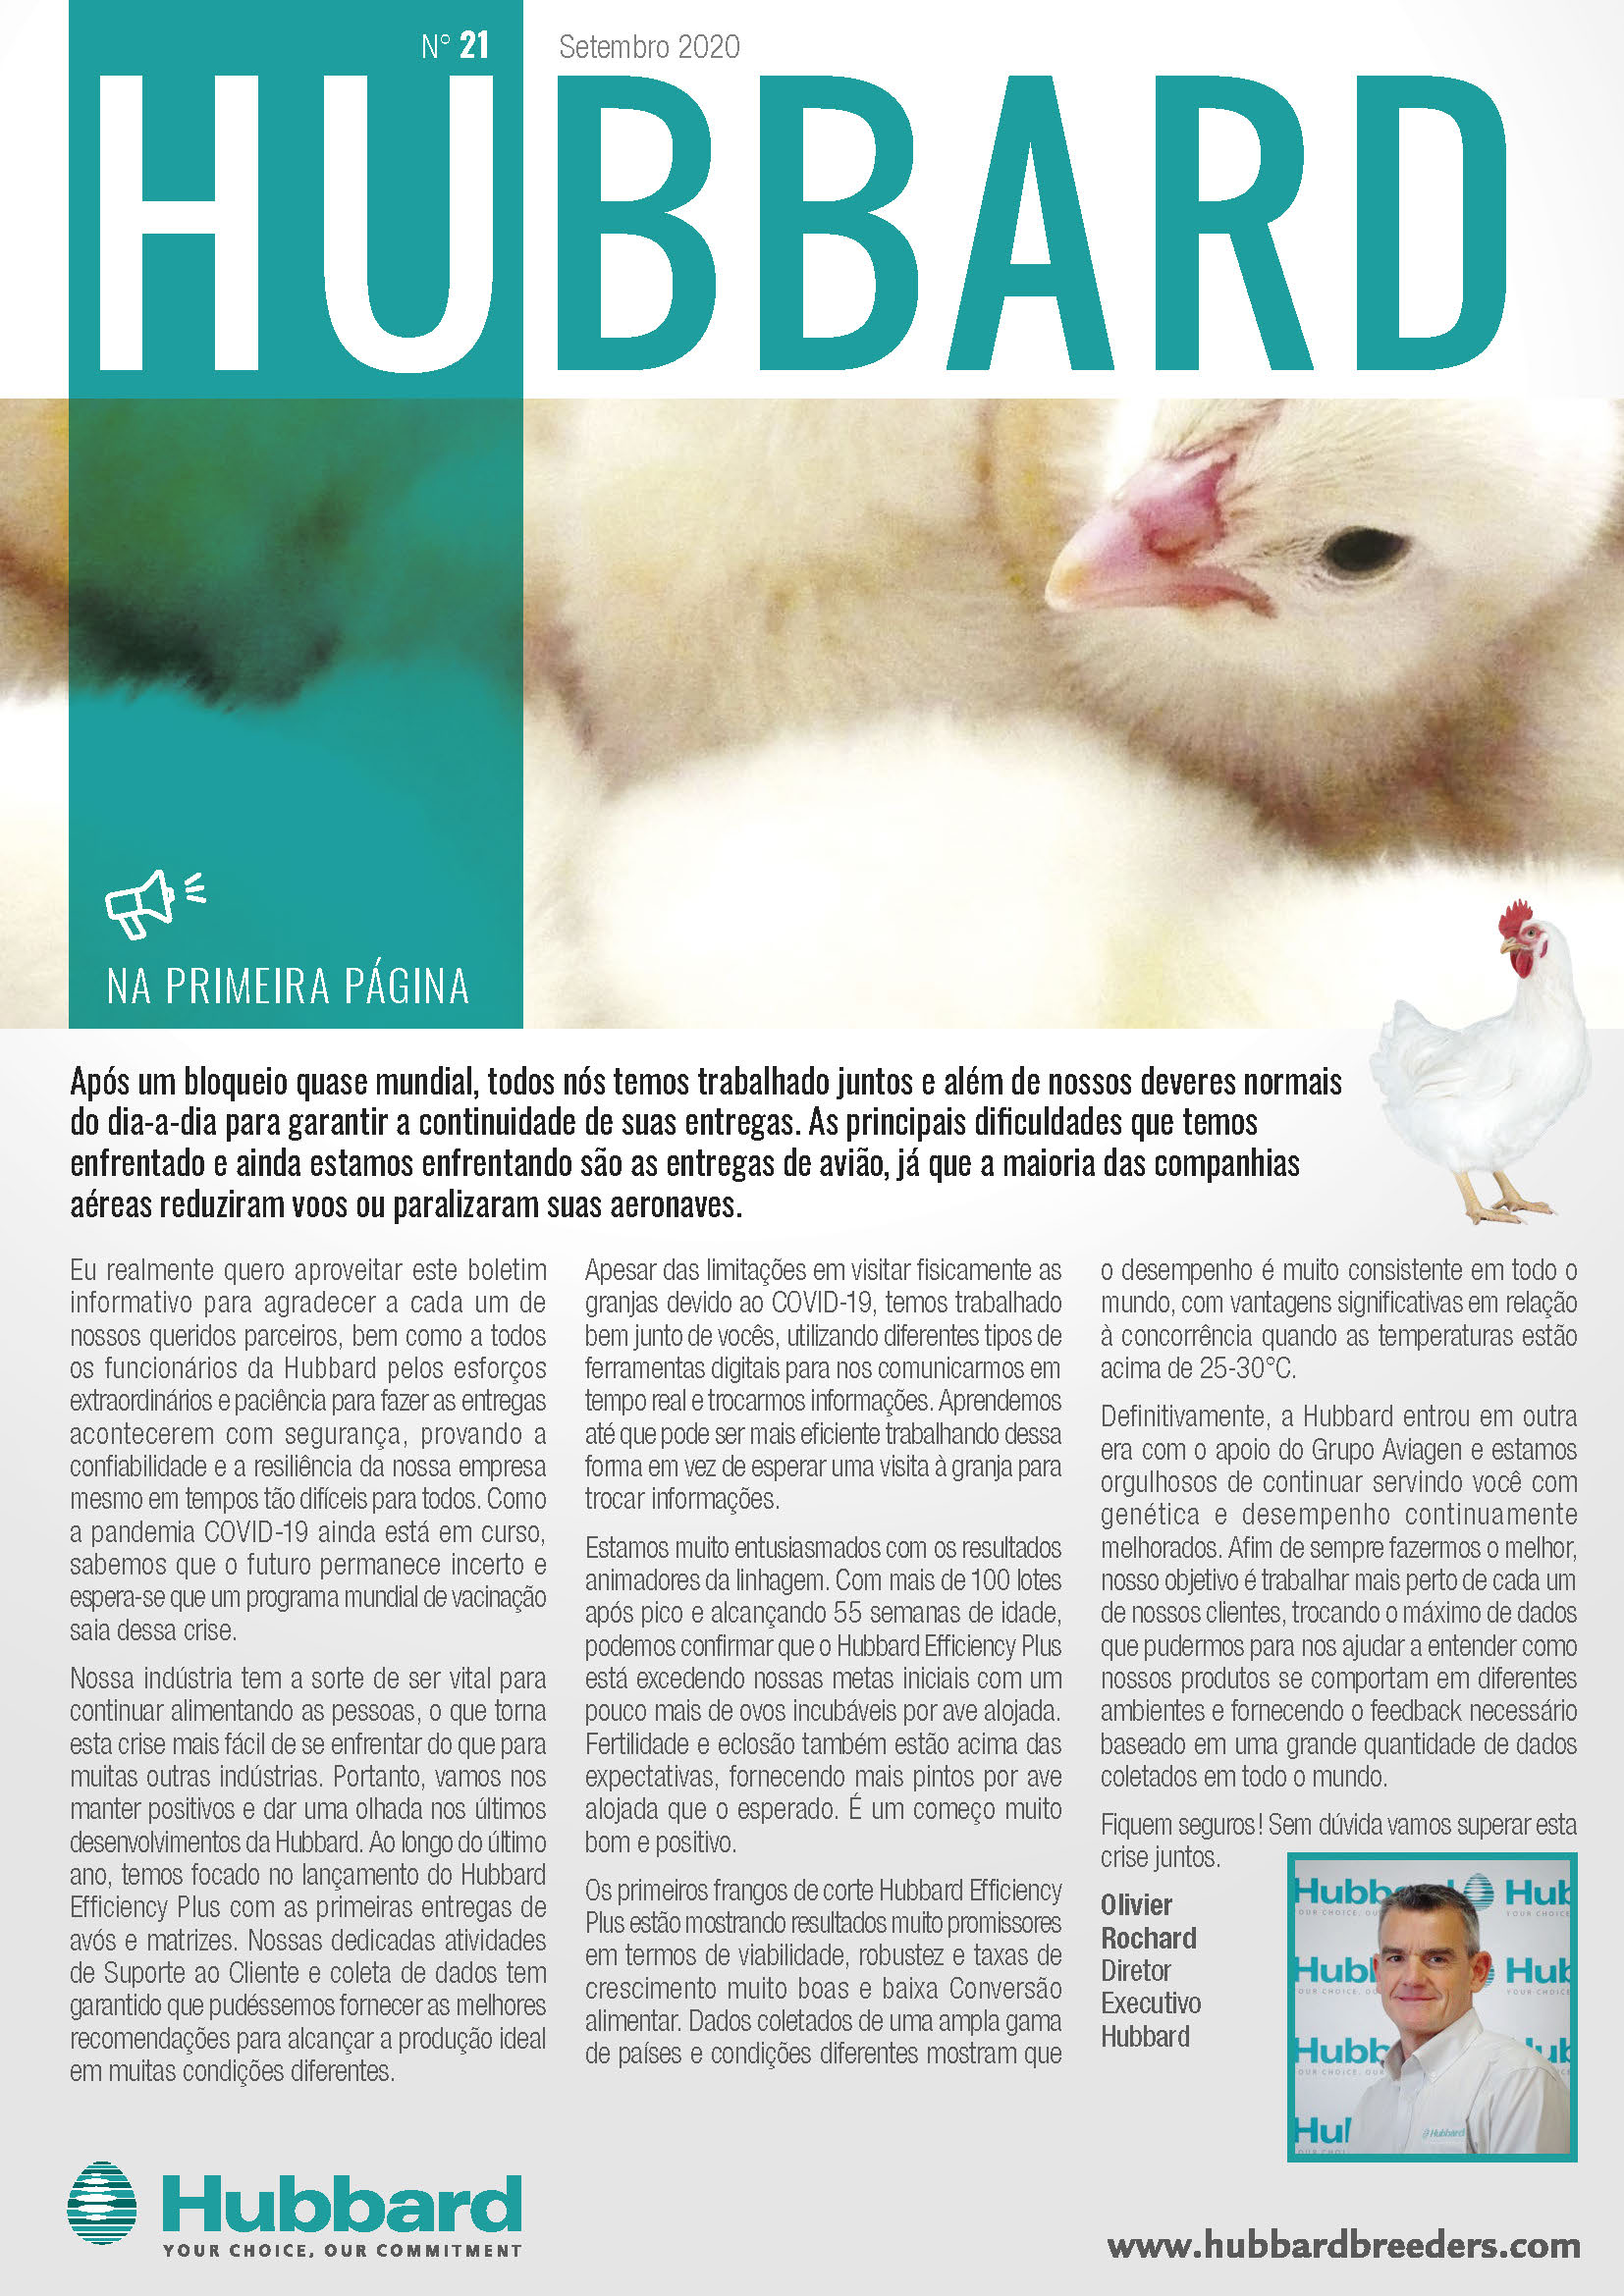 PT-BZ_Hubbard Newsletter Edition 21_Setembro 2020 (Portuguese)_Page_1